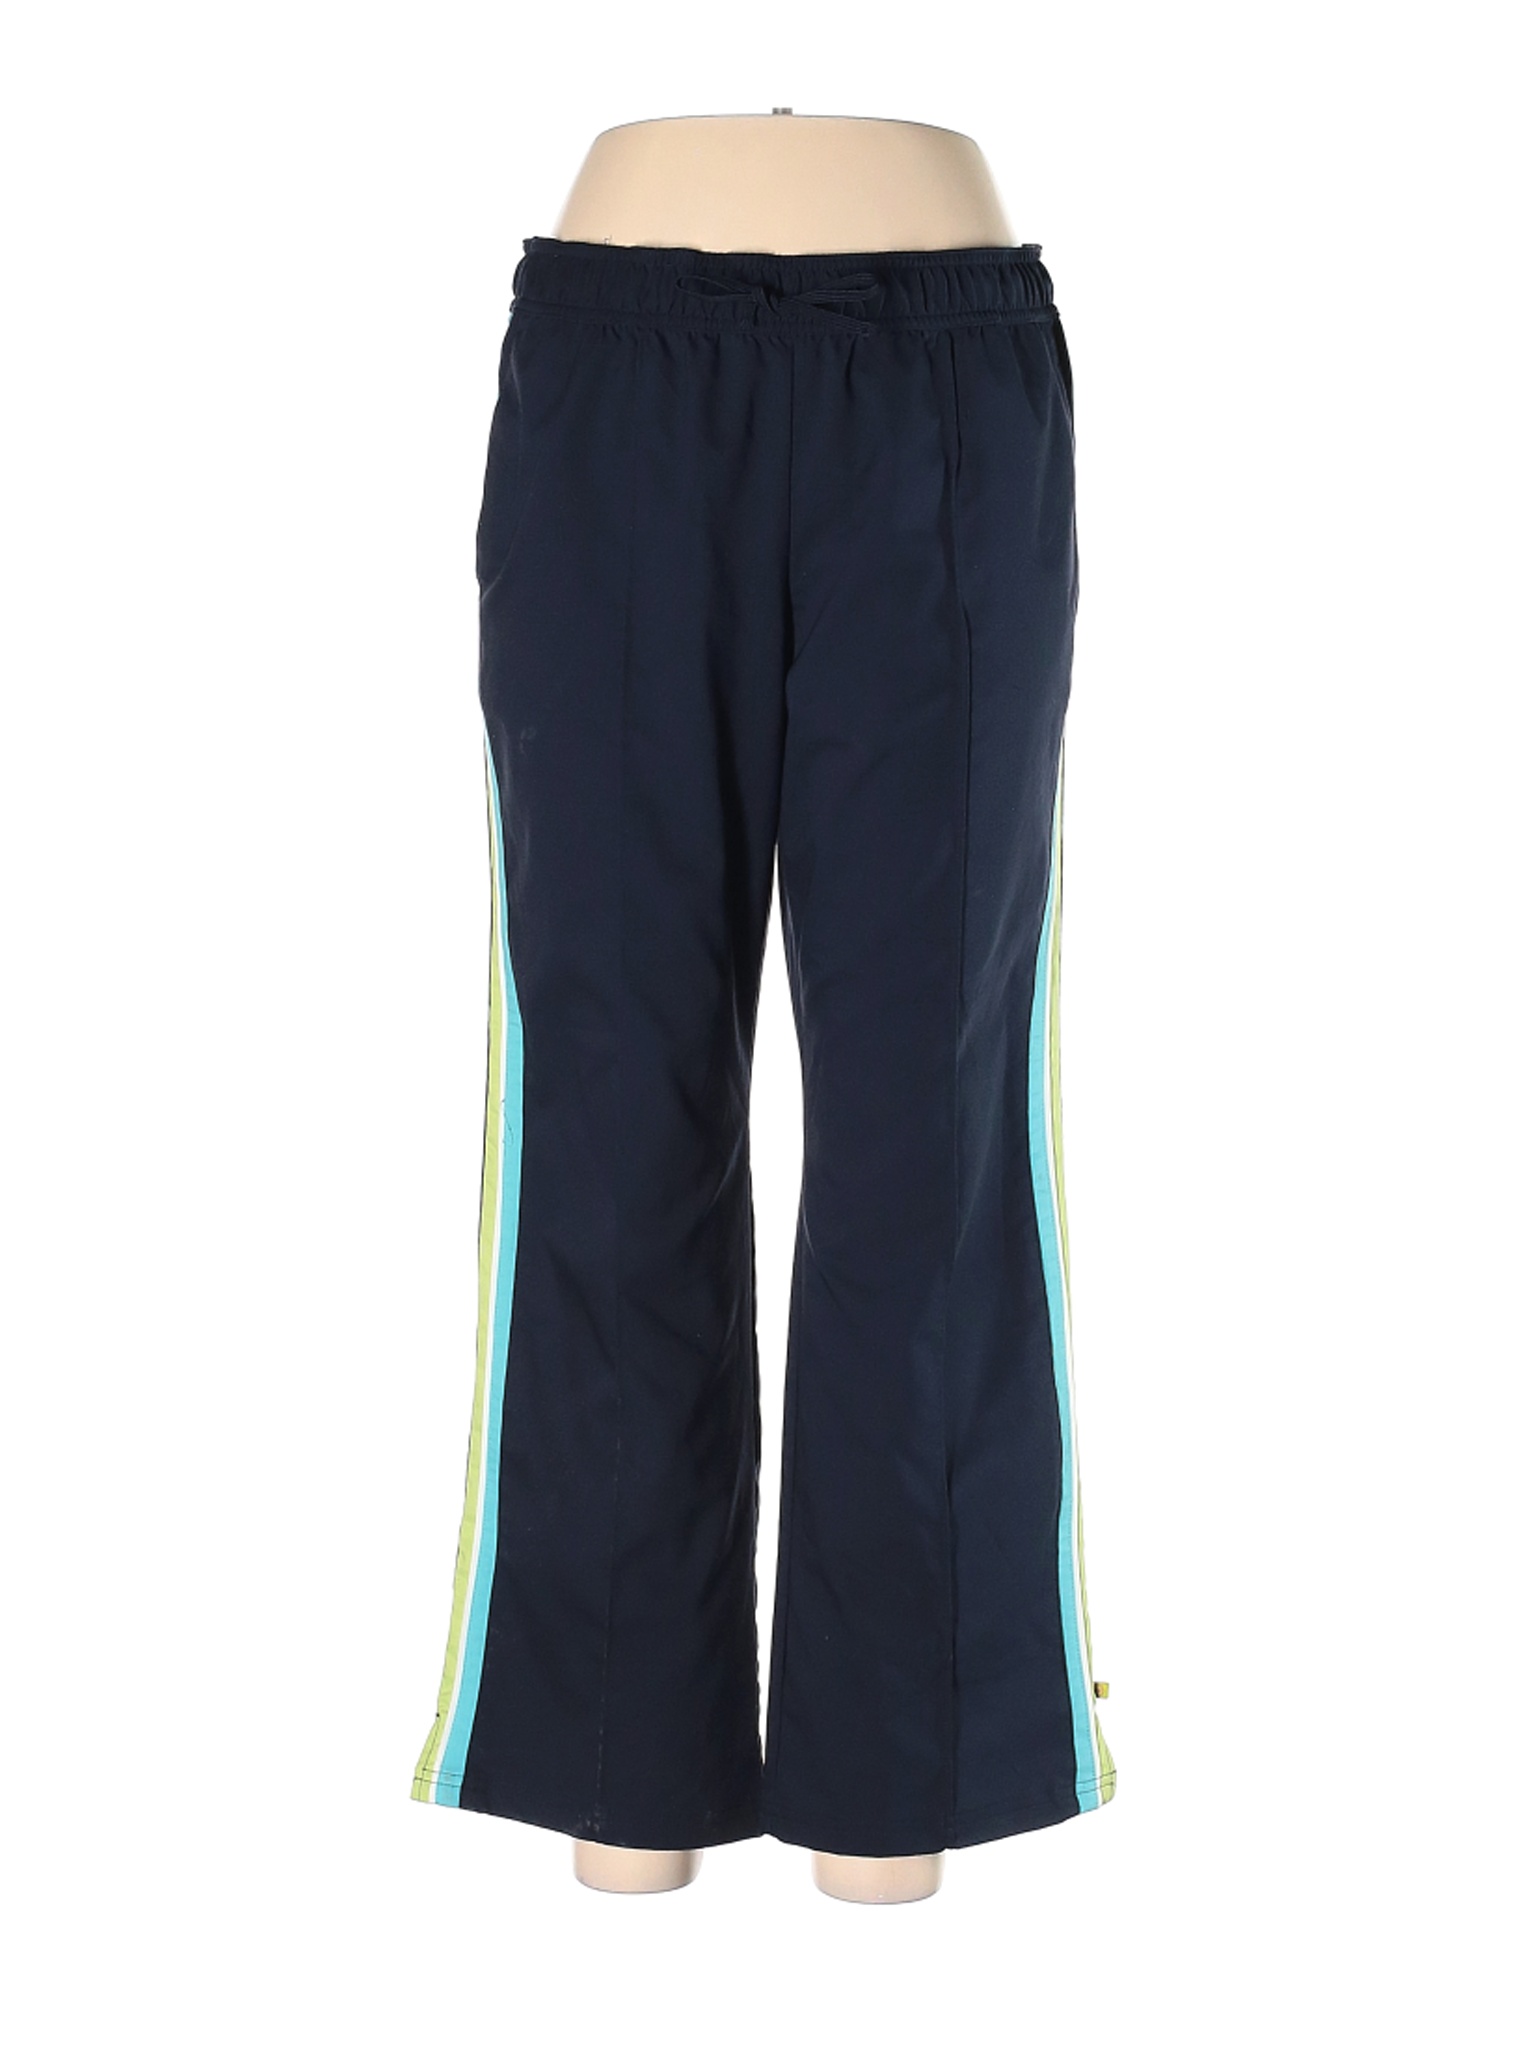 Made for Life Women Blue Track Pants L Petites | eBay